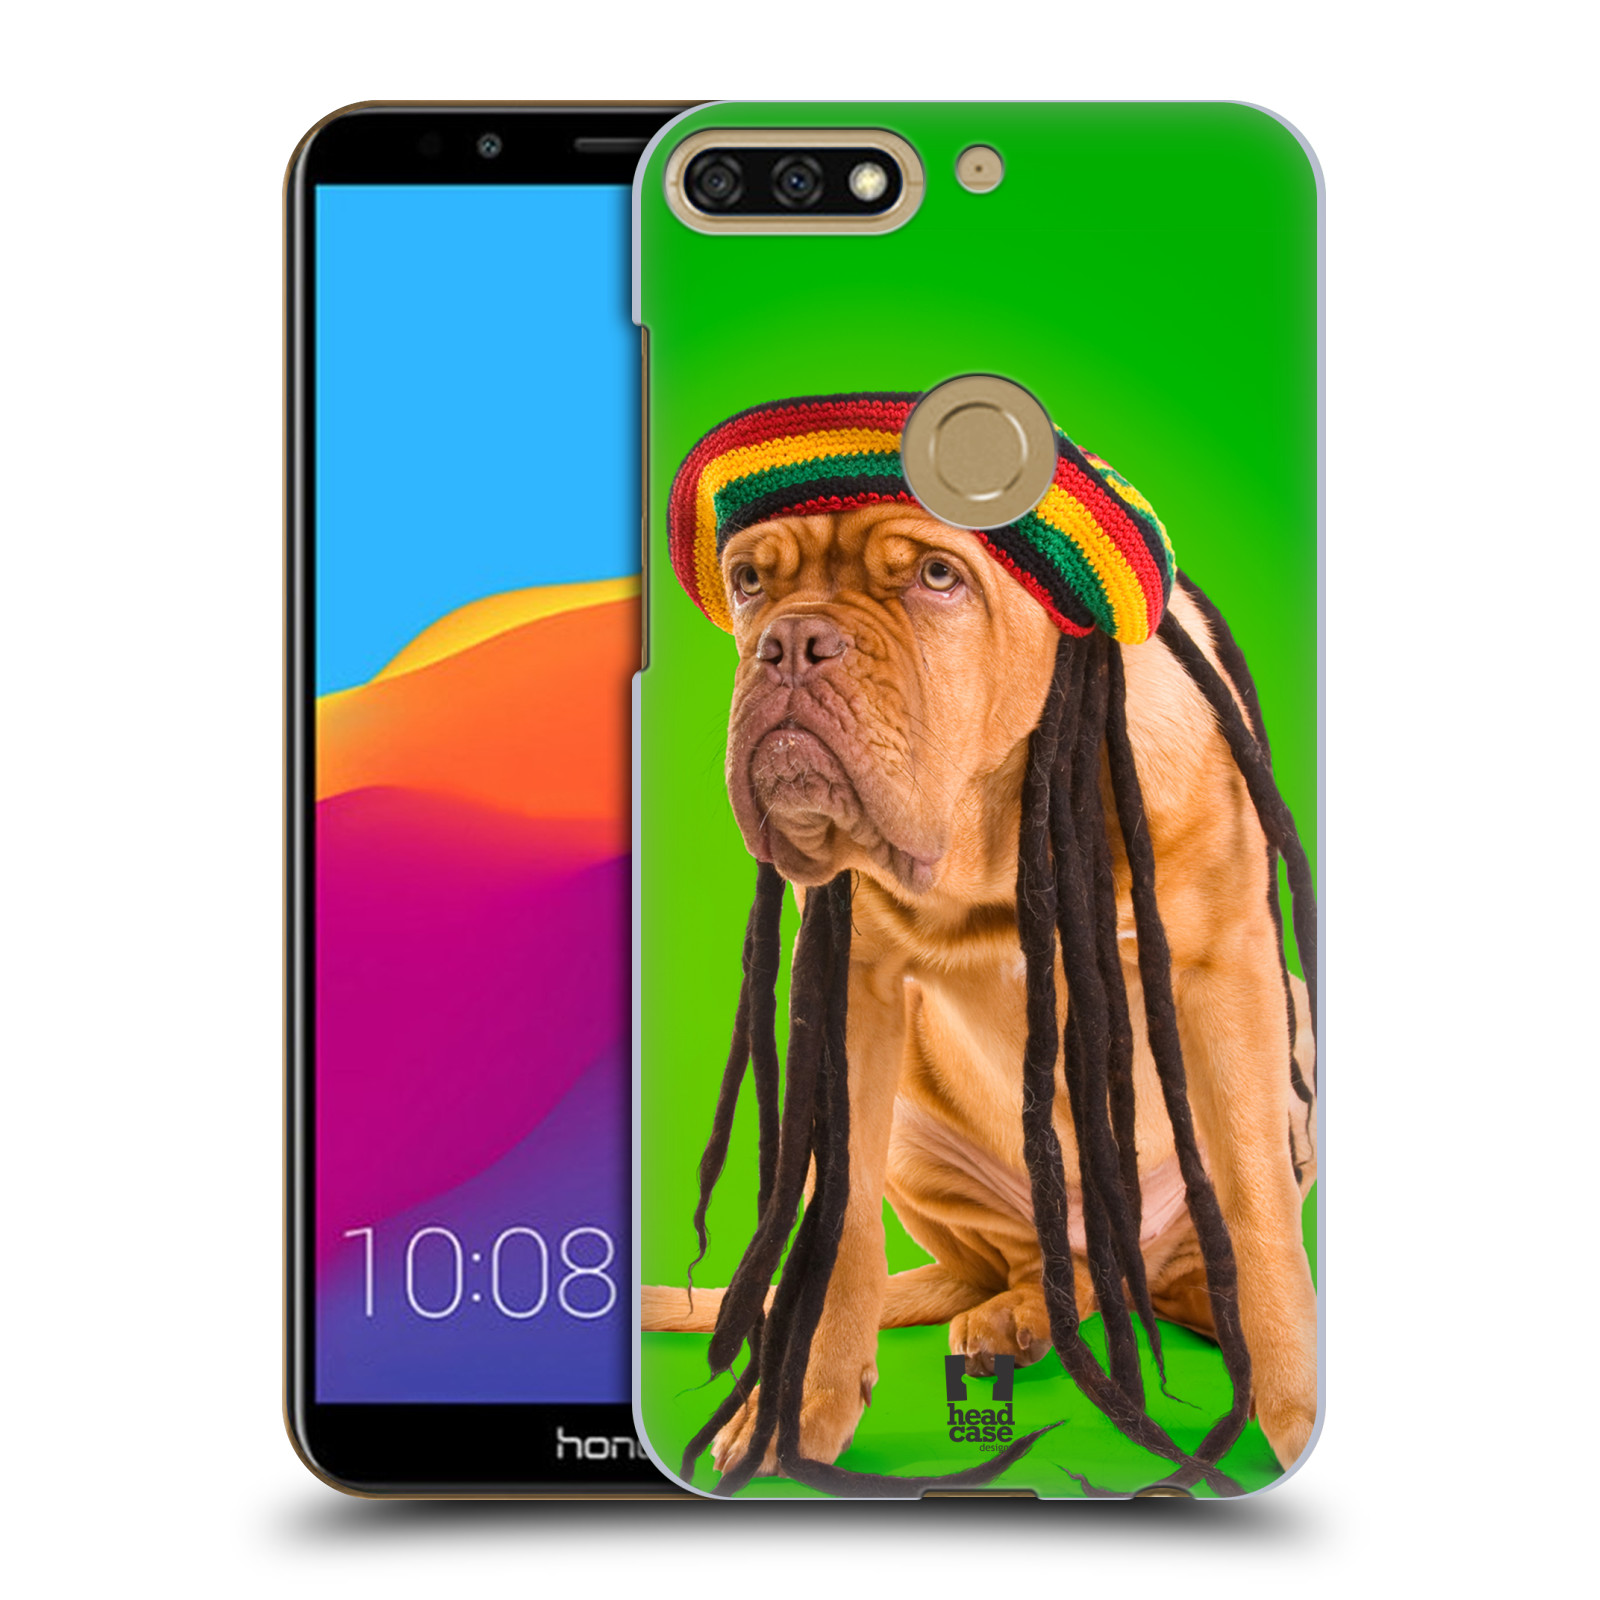 HEAD CASE plastový obal na mobil Honor 7c vzor Legrační zvířátka pejsek dredy Rastafarián